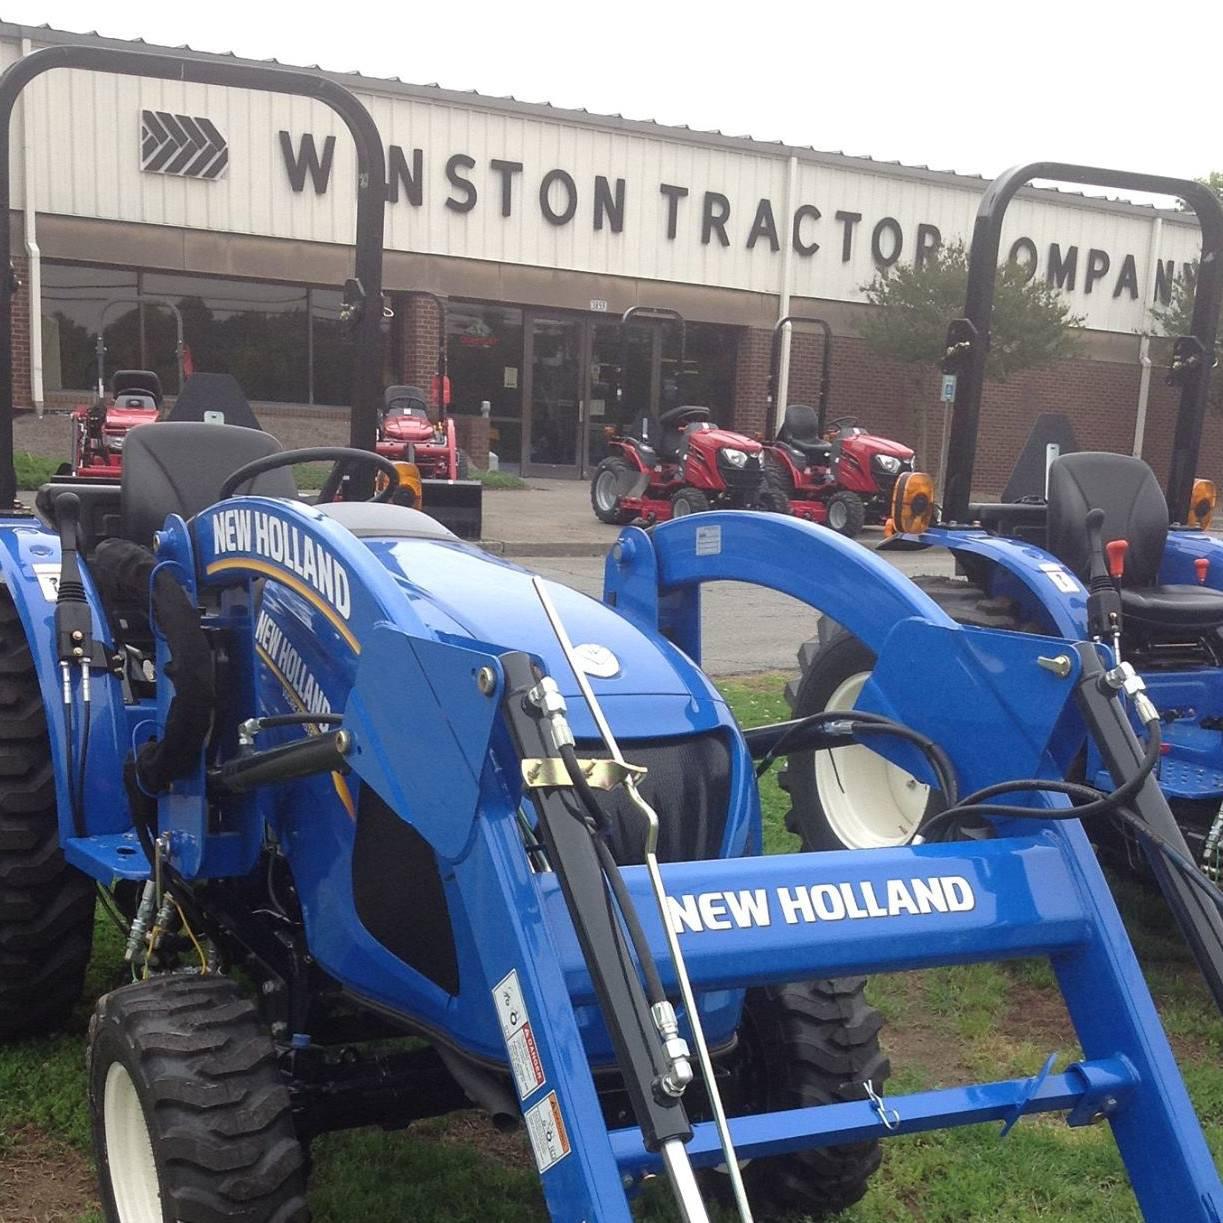 Winston Tractor Company 3859 N Patterson Ave, Winston Salem, NC 27105